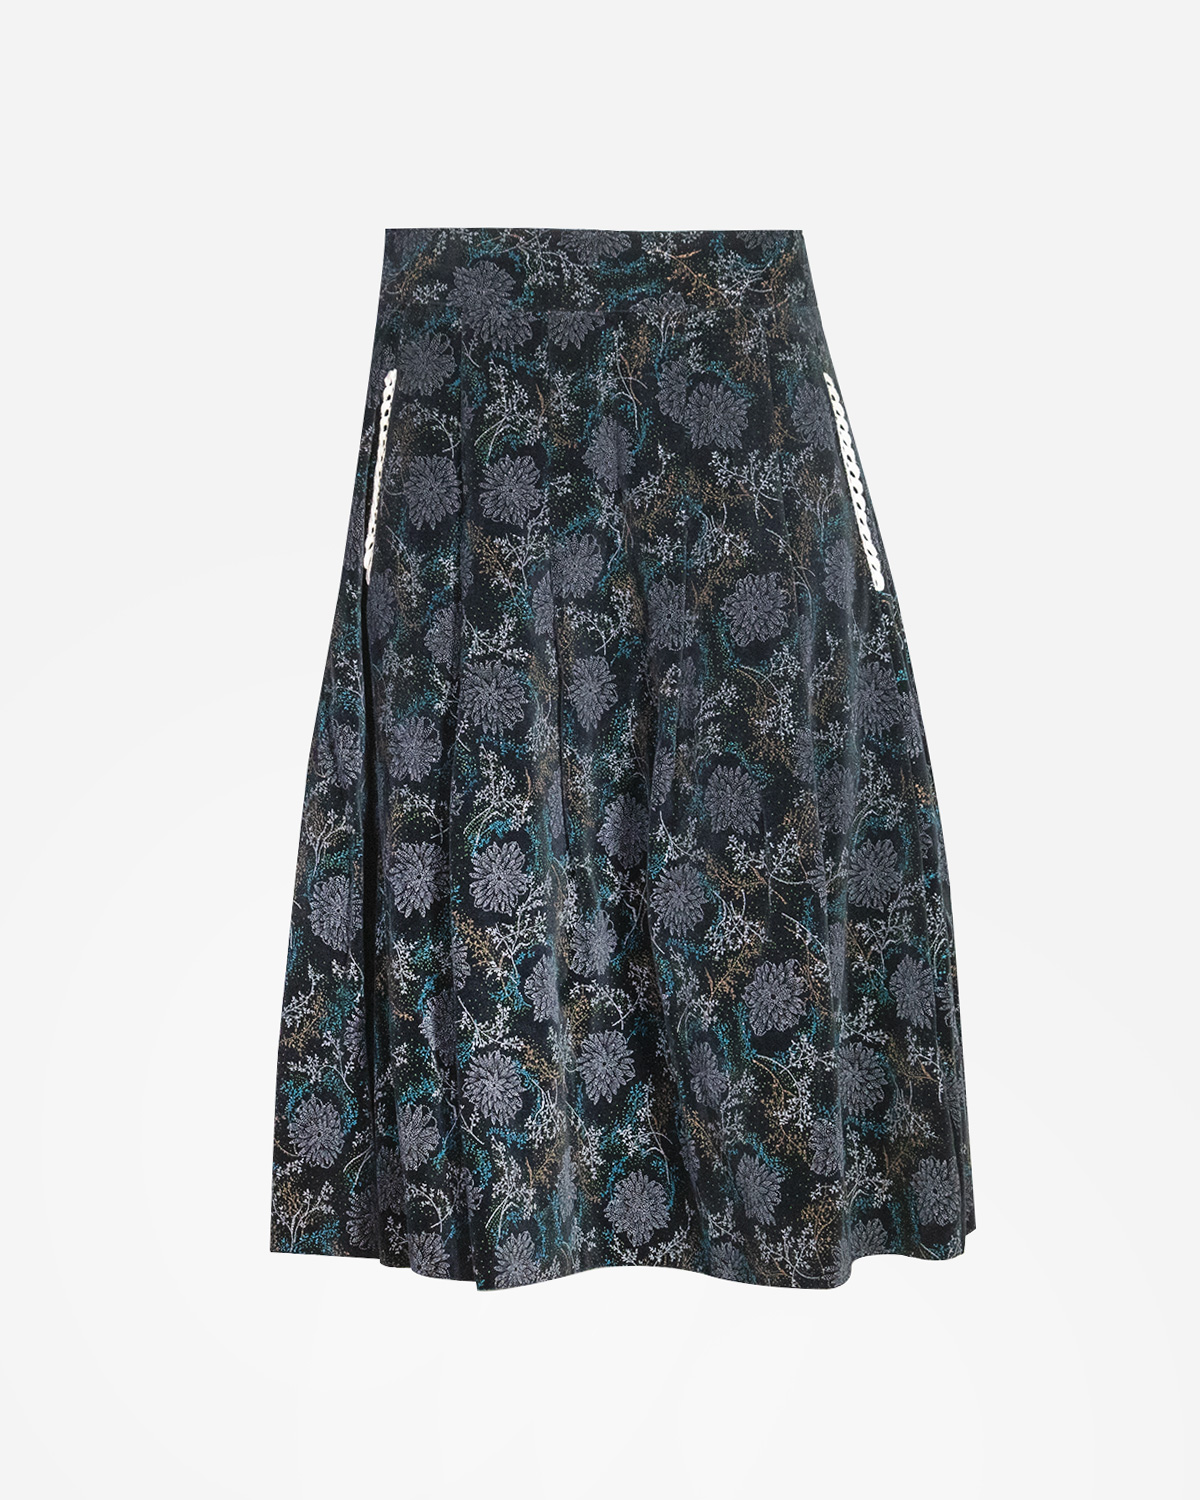 Vintage colored velvet skirts: 4 pieces